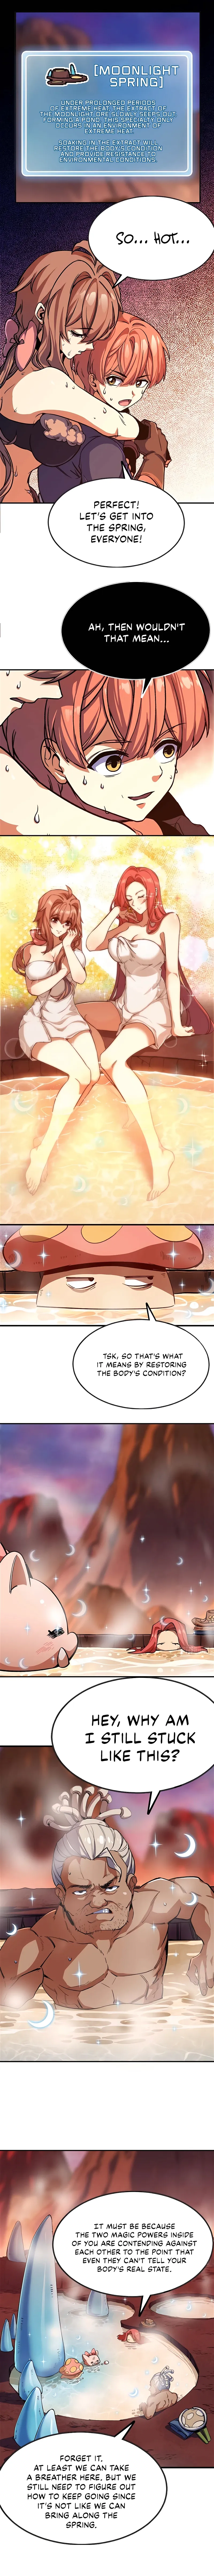 Mushroom Hero Chapter 99 page 7